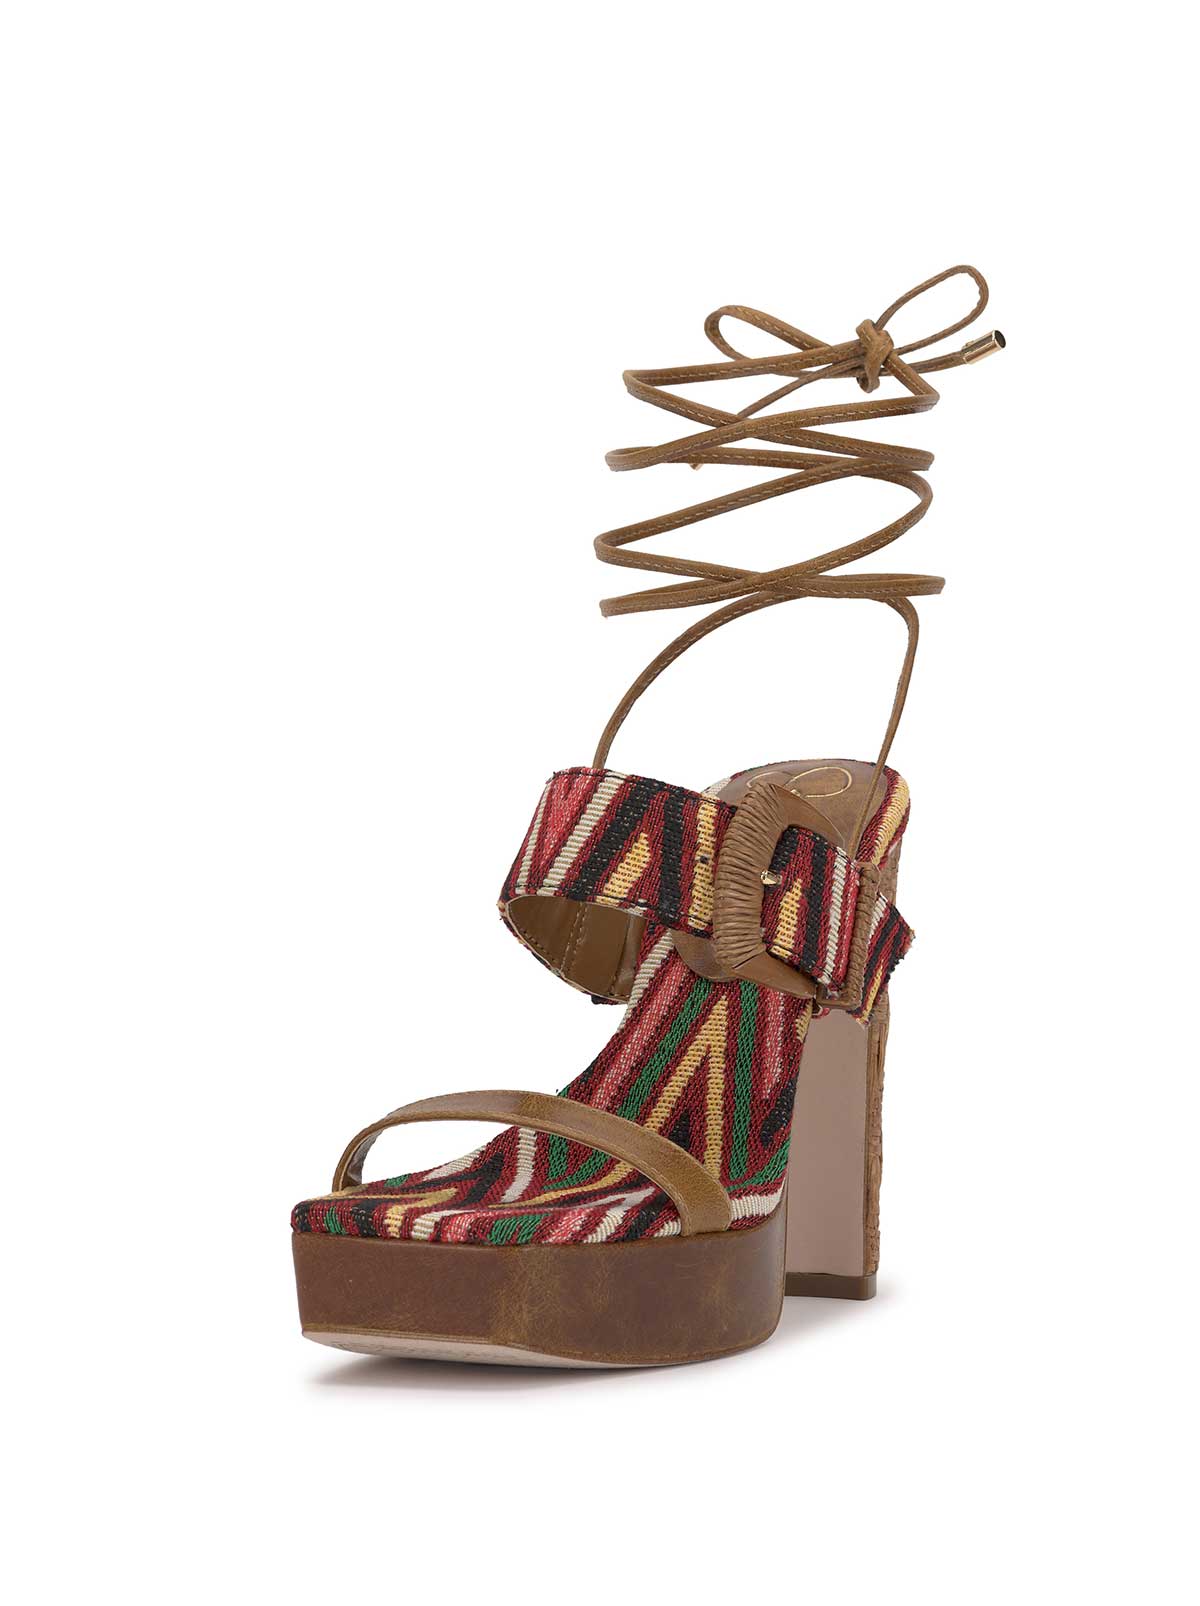 Buy MYRA Women's Brown Patent Block Heels Sandal - 6 UK at Amazon.in